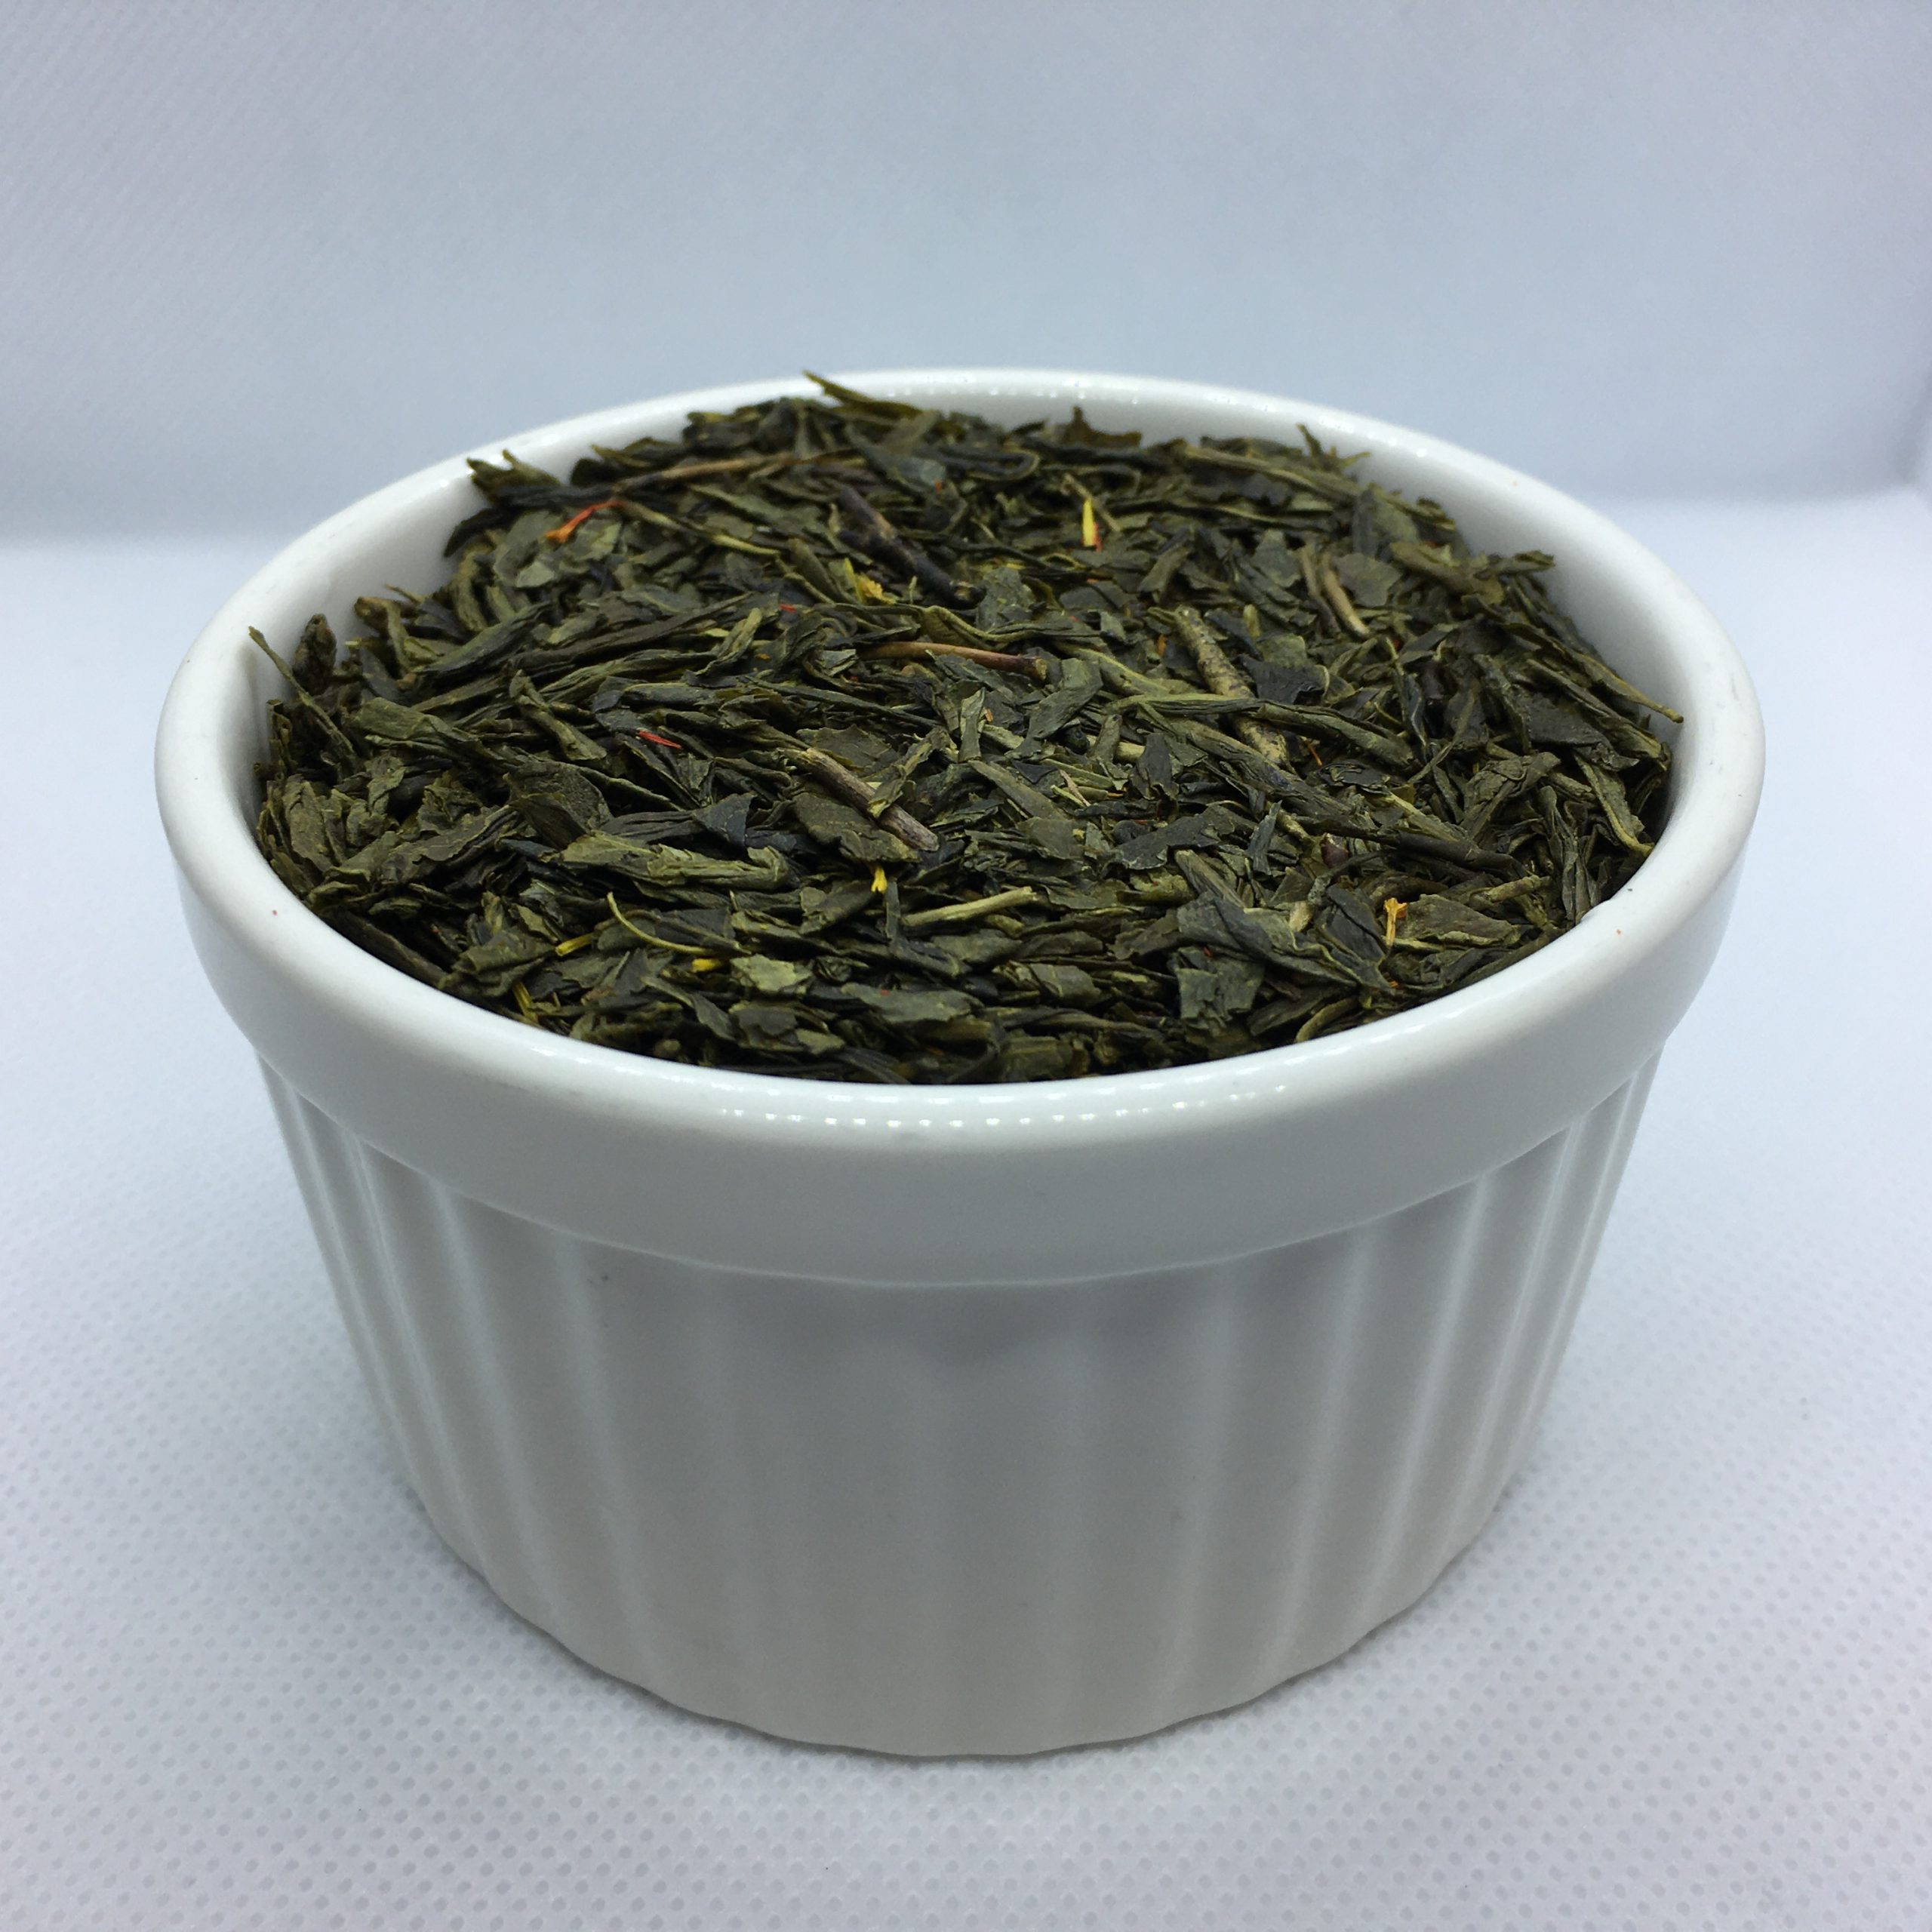 Mandarin Green Tea First Coast Tea Co.